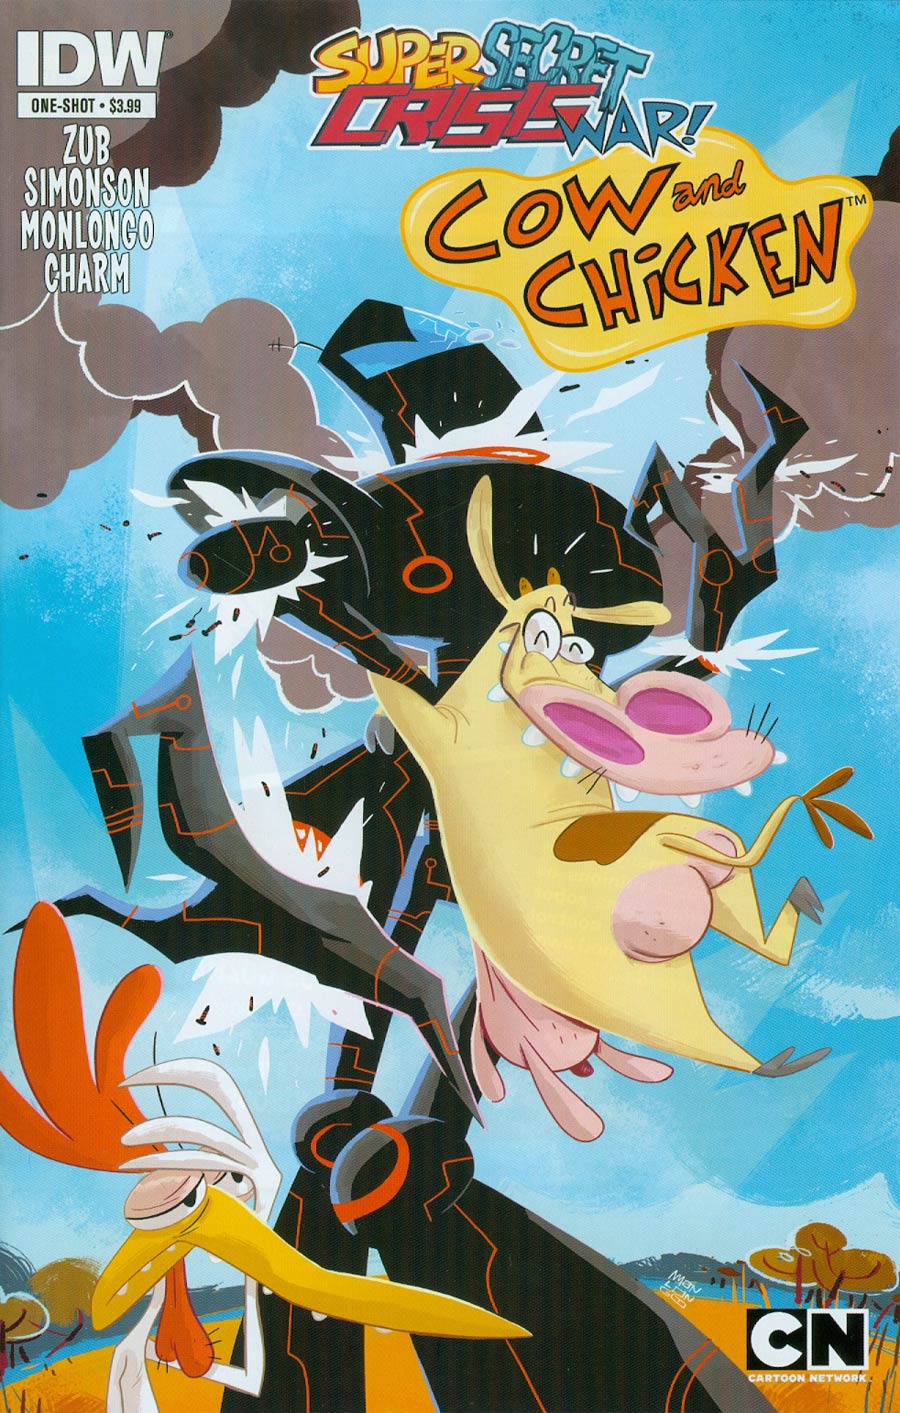 Super Secret Crisis War Cow & Chicken #1 Cover A Regular Joe Monlongo Cover